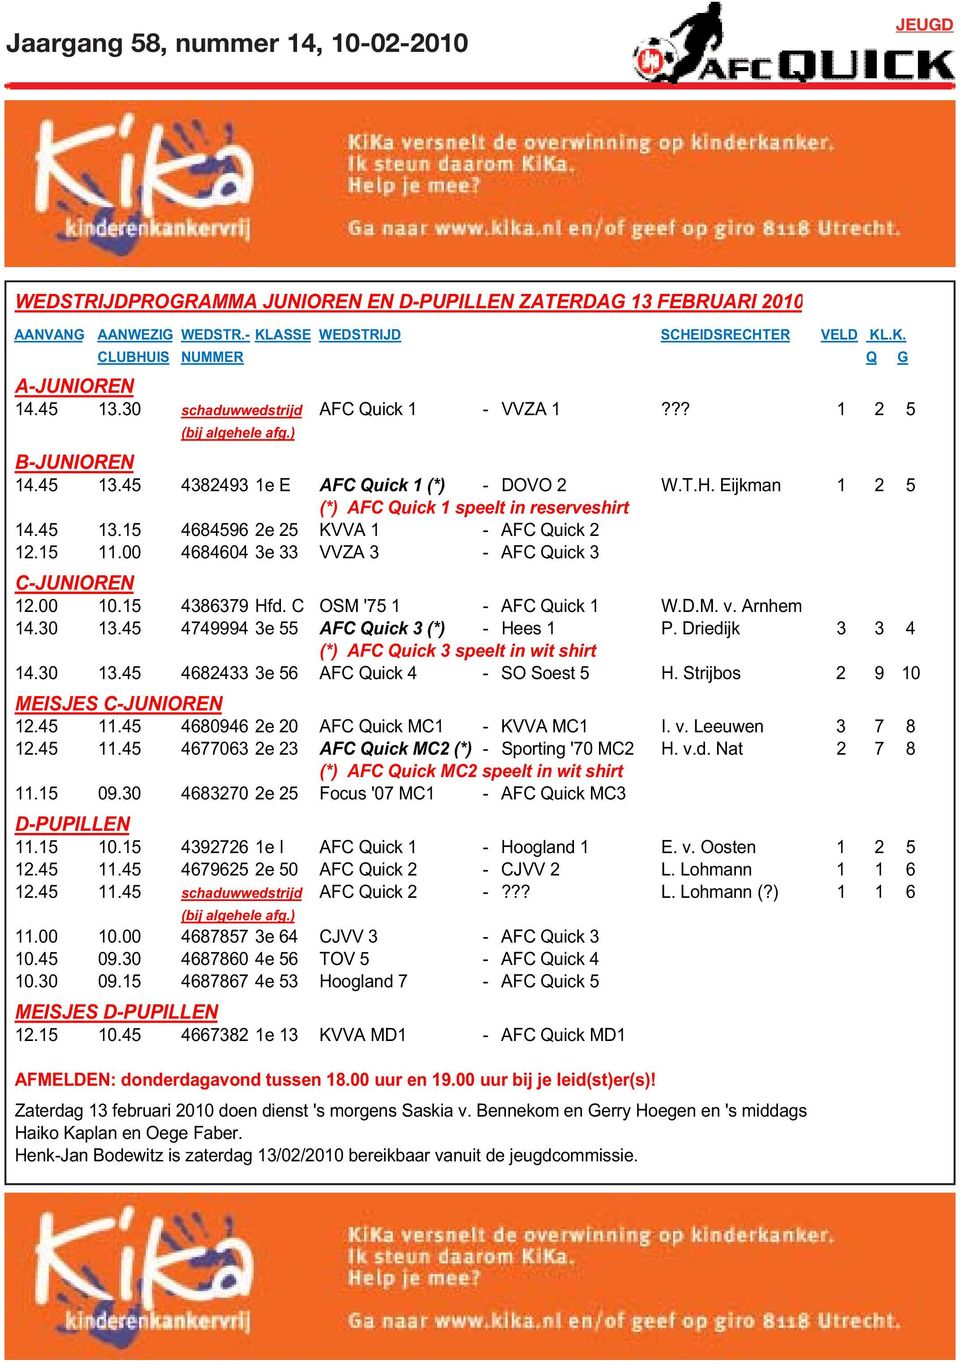 C OSM '75 1 - AFC Quick 1 W.D.M. v. Arnhem 14.30 13.45 4749994 3e 55 AFC Quick 3 (*) - Hees 1 P. Driedijk 3 3 4 (*) AFC Quick 3 speelt in wit shirt 14.30 13.45 4682433 3e 56 AFC Quick 4 - SO Soest 5 H.